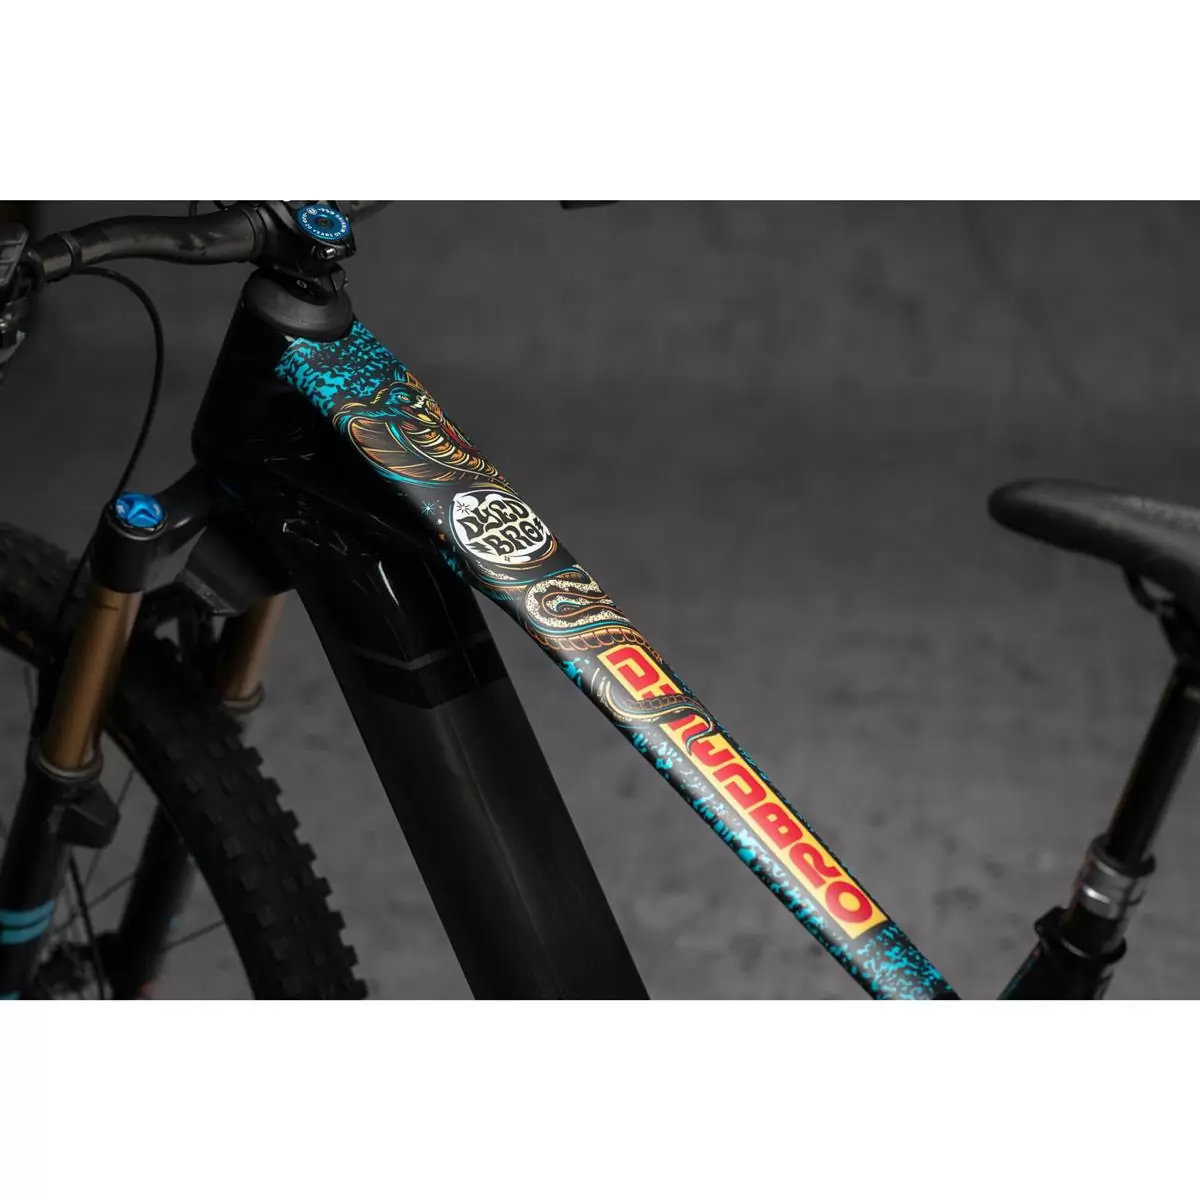 E-Bike Frame Protection Kit RRR Multicolour - image